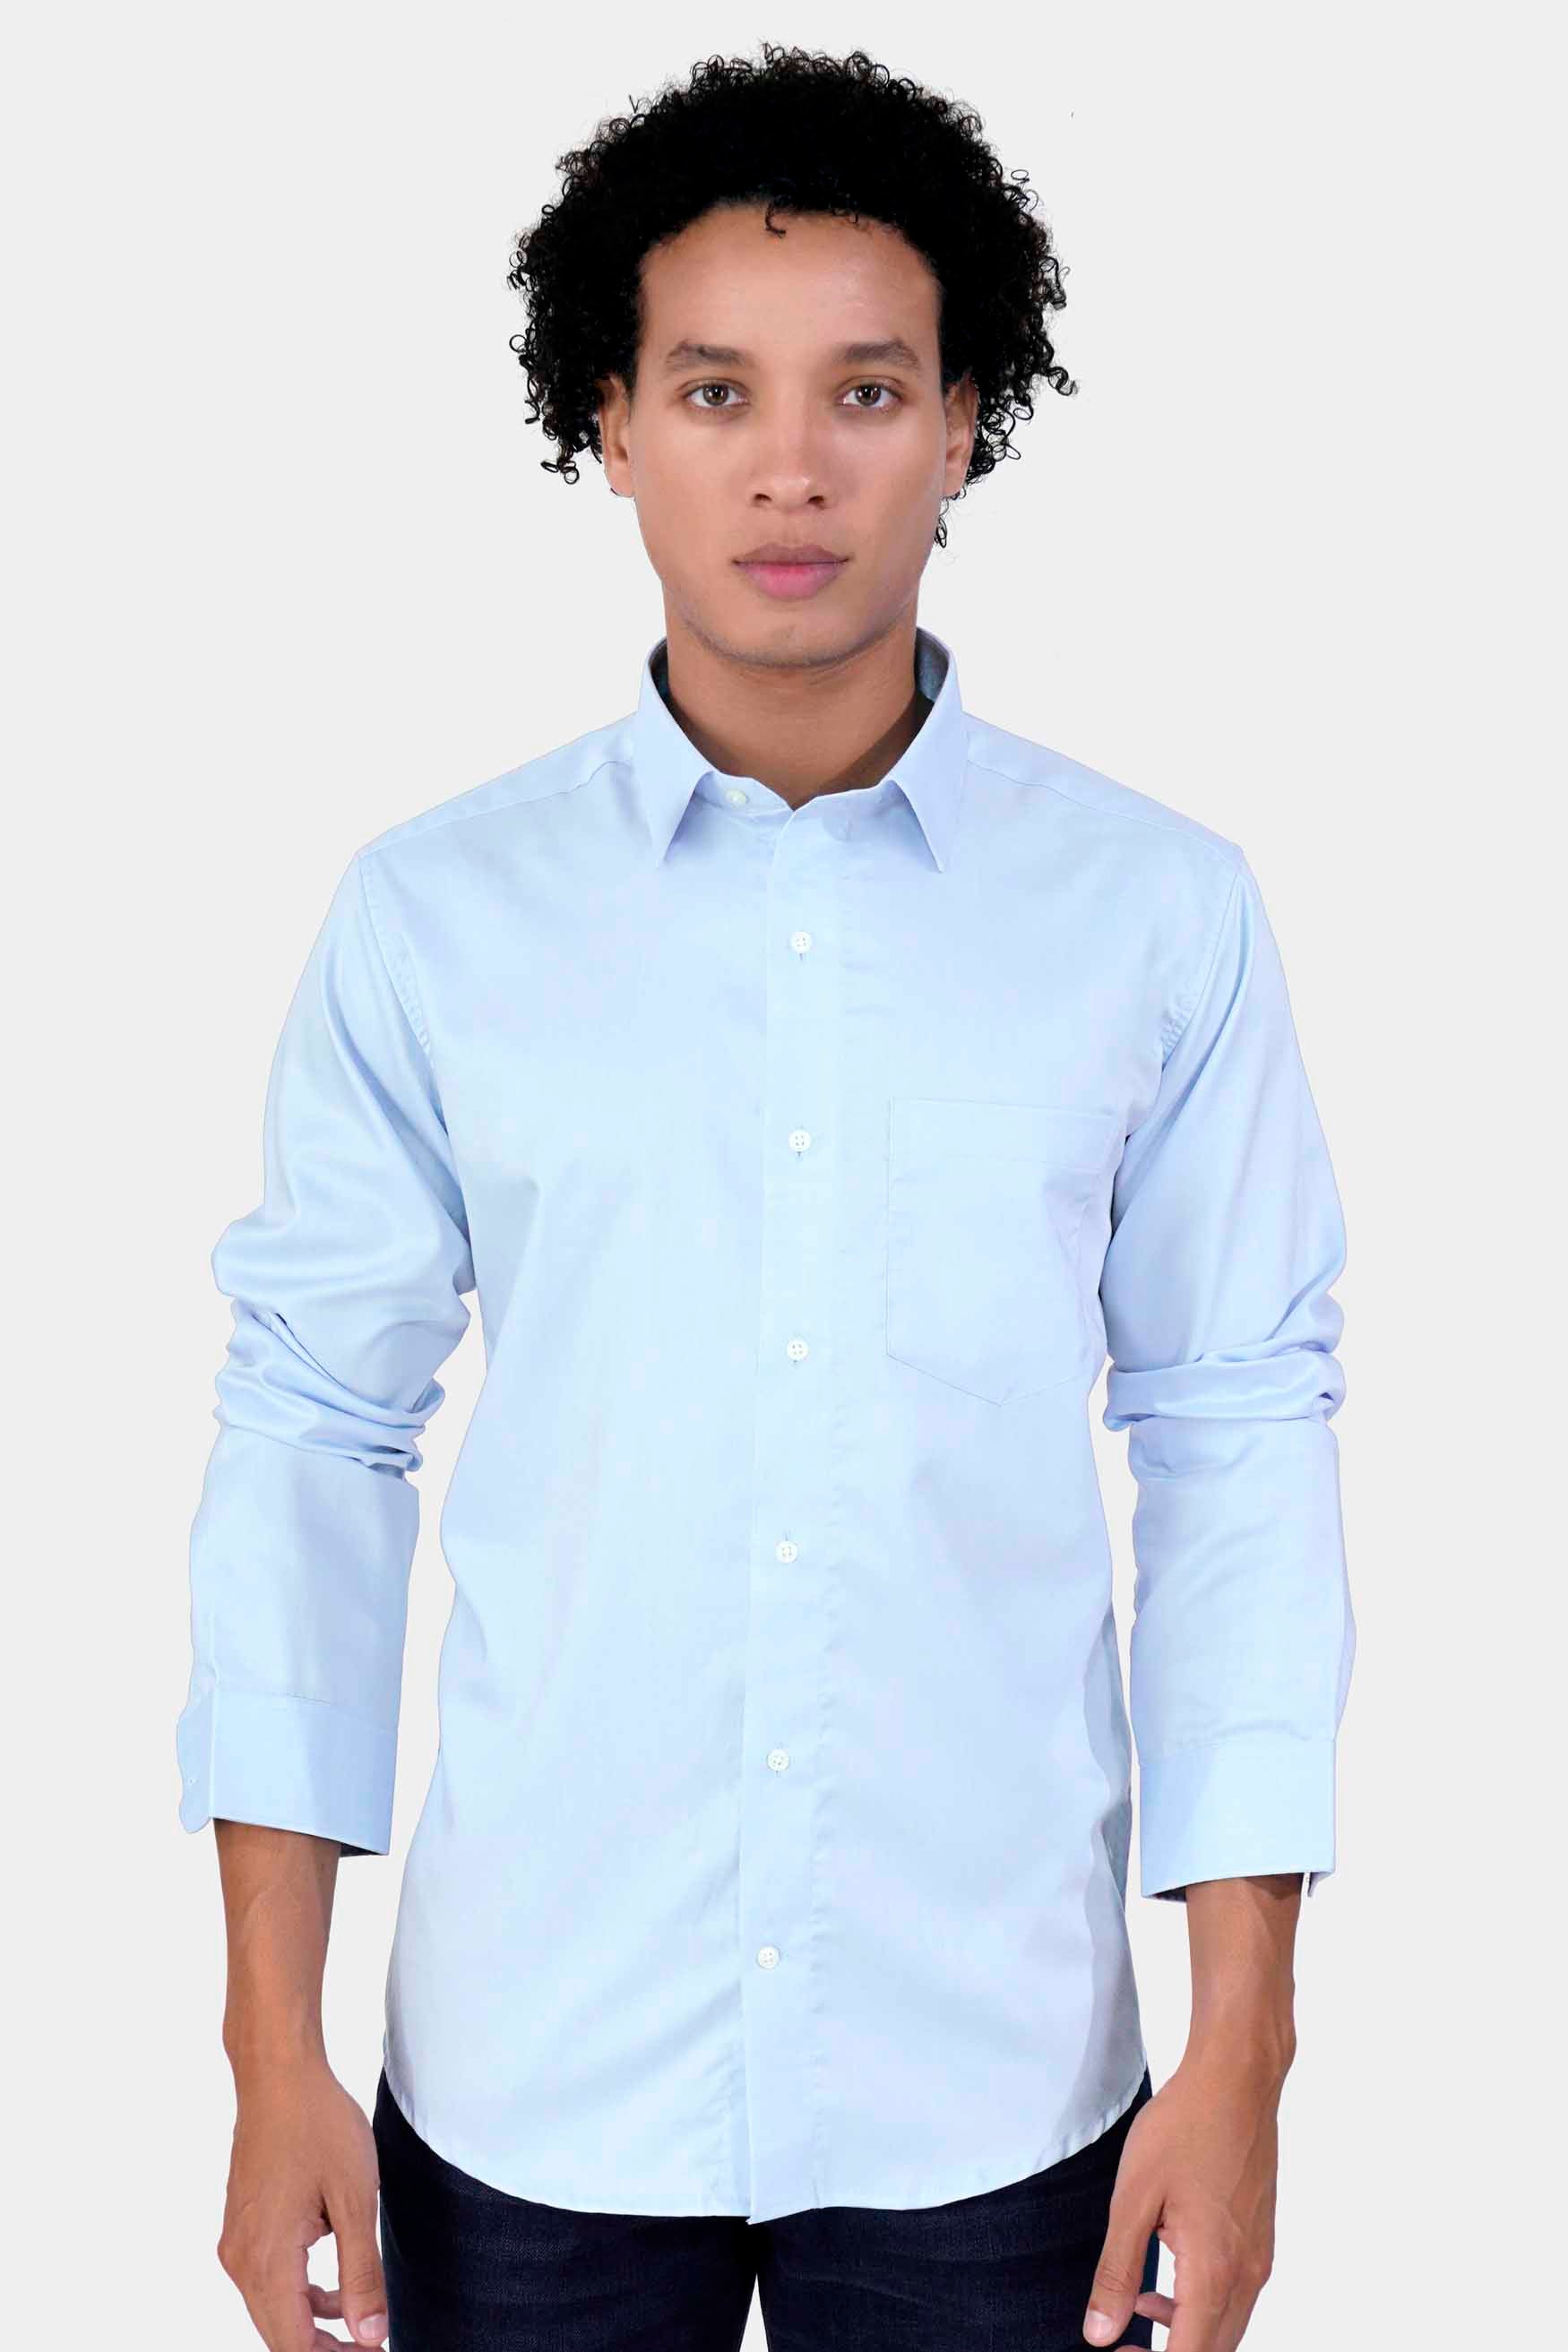 Carmel Navy Cotton and Tencel Pique Shirt by Proper Cloth